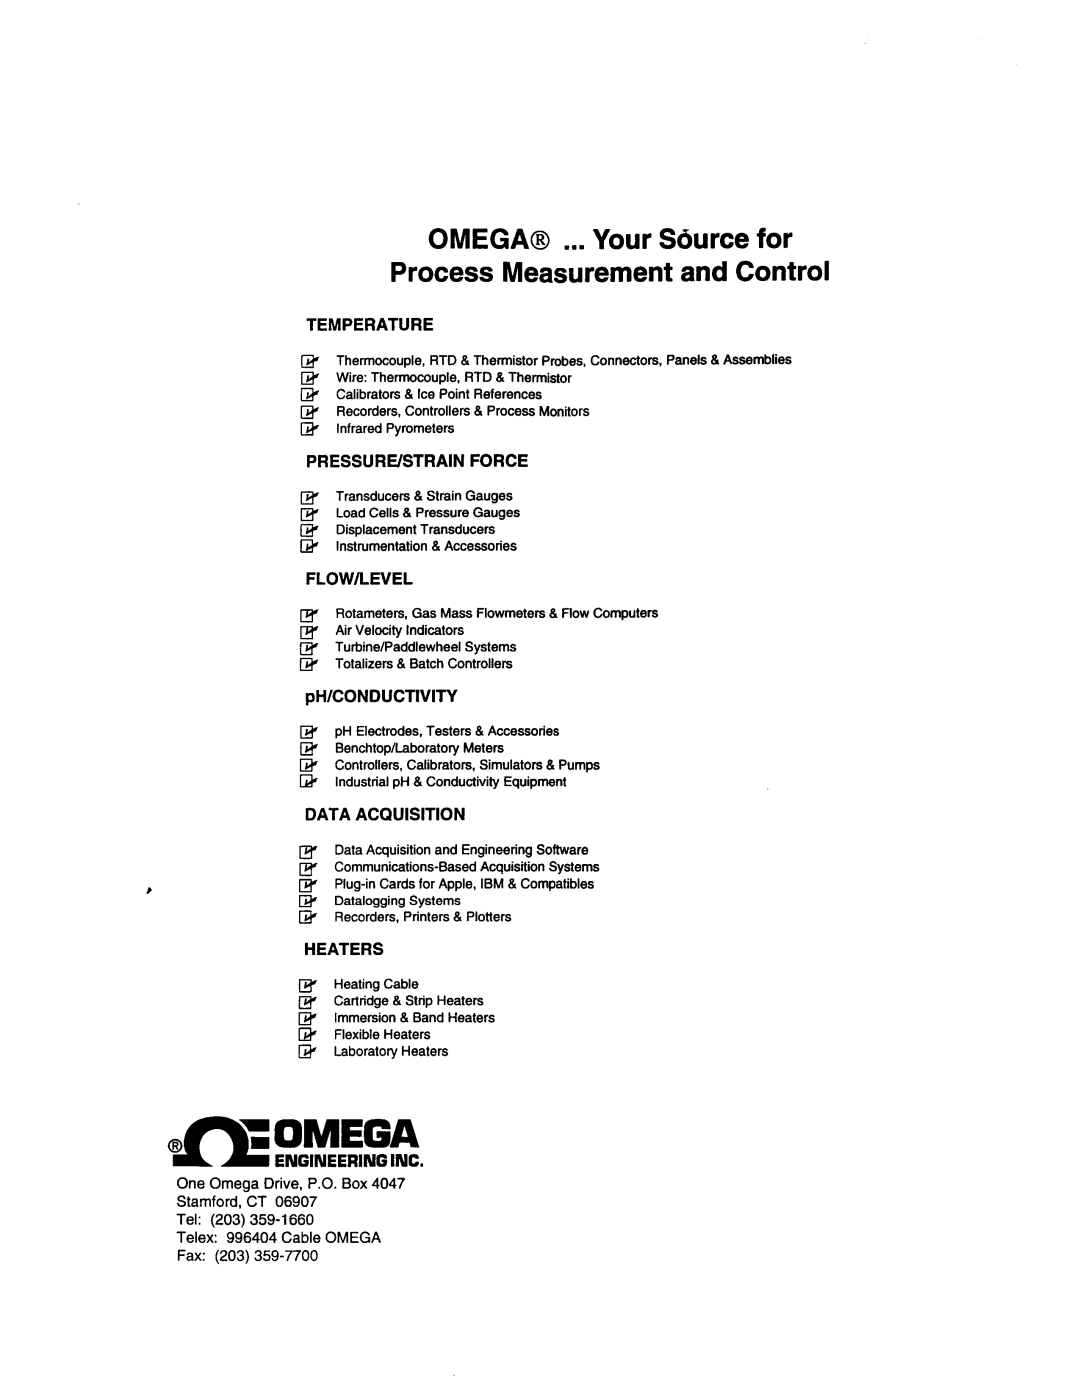 Omega Vehicle Security DPC10-CS Temperature, Pressure/Strain Force, Flow/Level, pH/CONDUCTIVITY, Data Acquisition, Heaters 